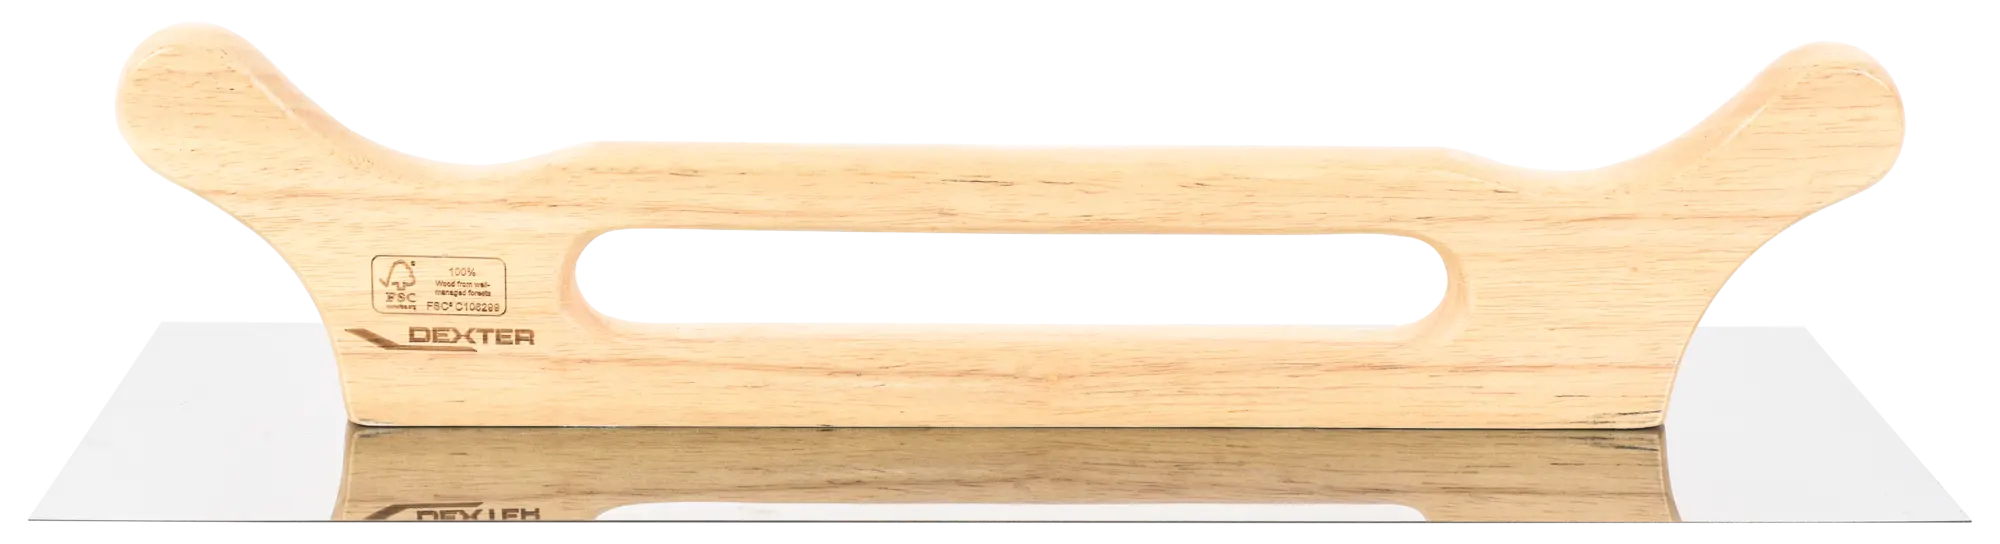 Llana rectangular dexter de 48 cm de cuchilla